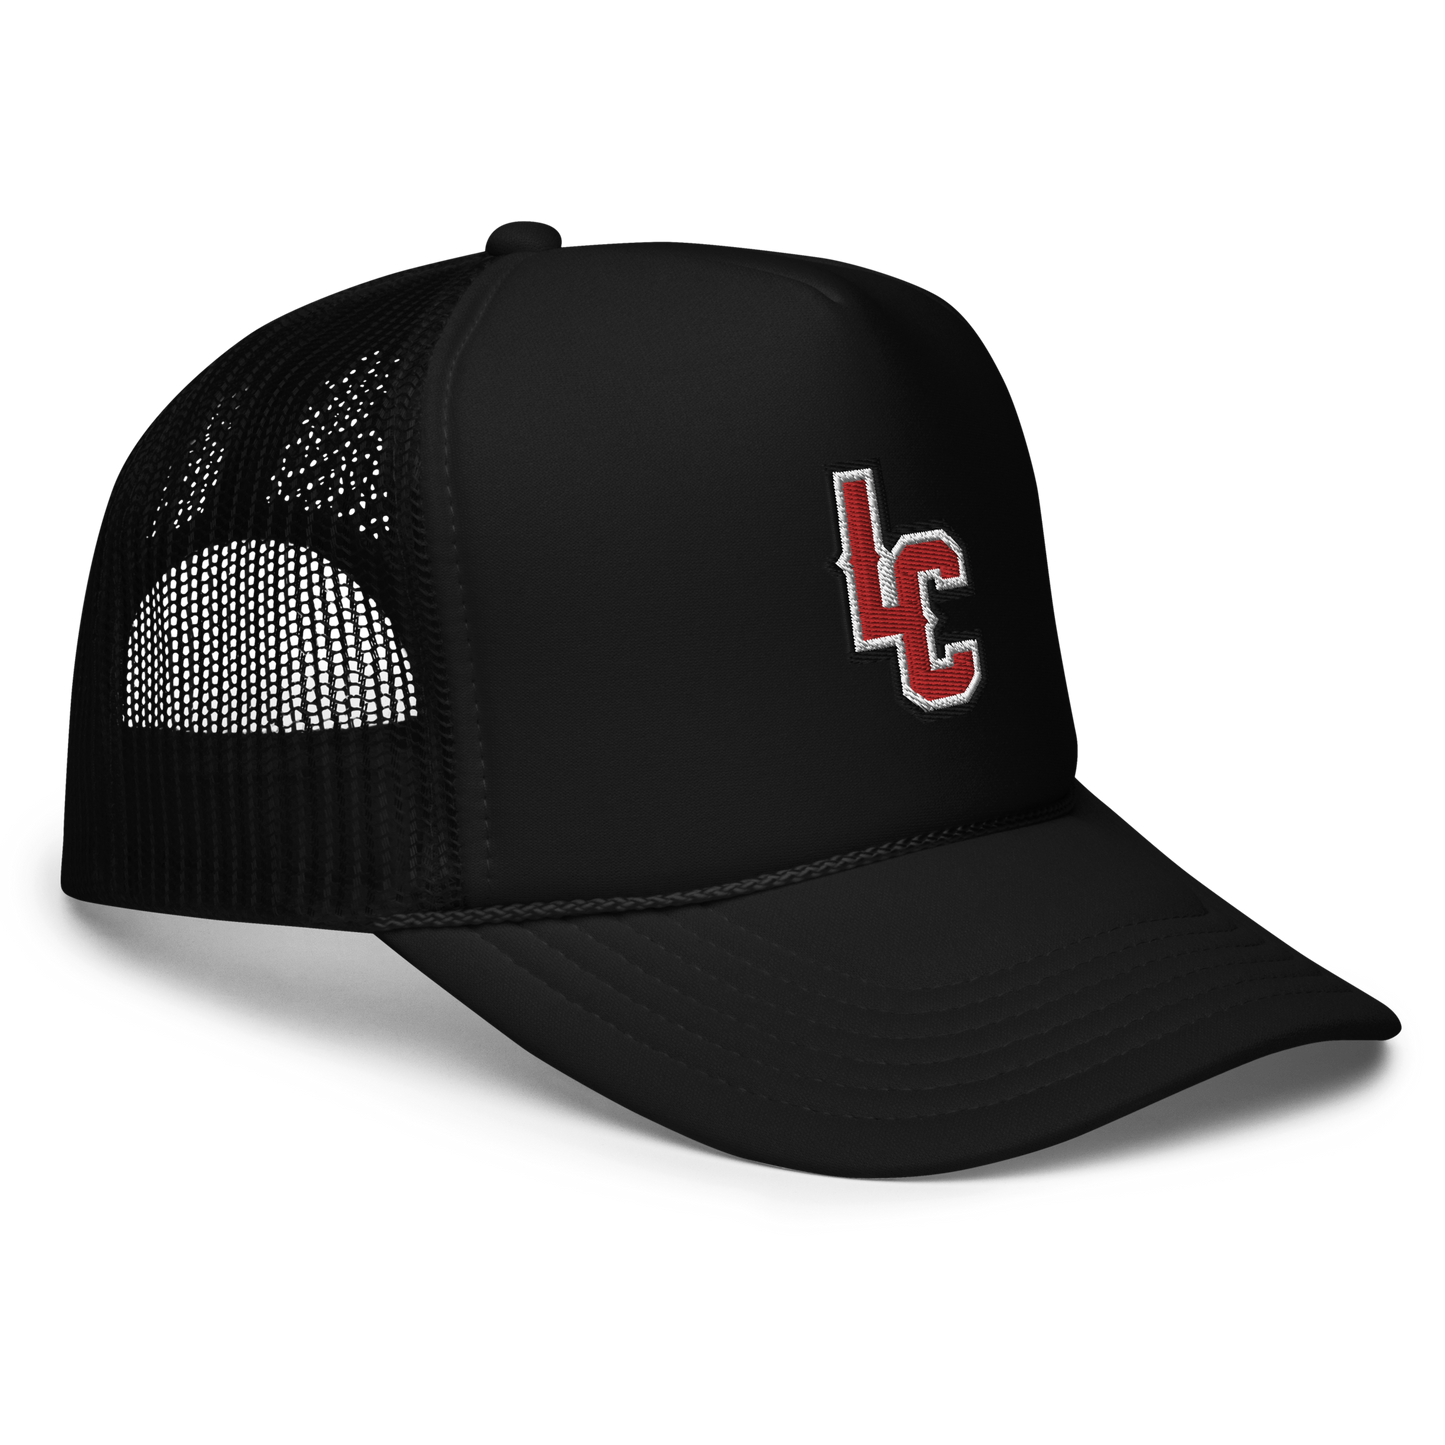 LC trucker hats